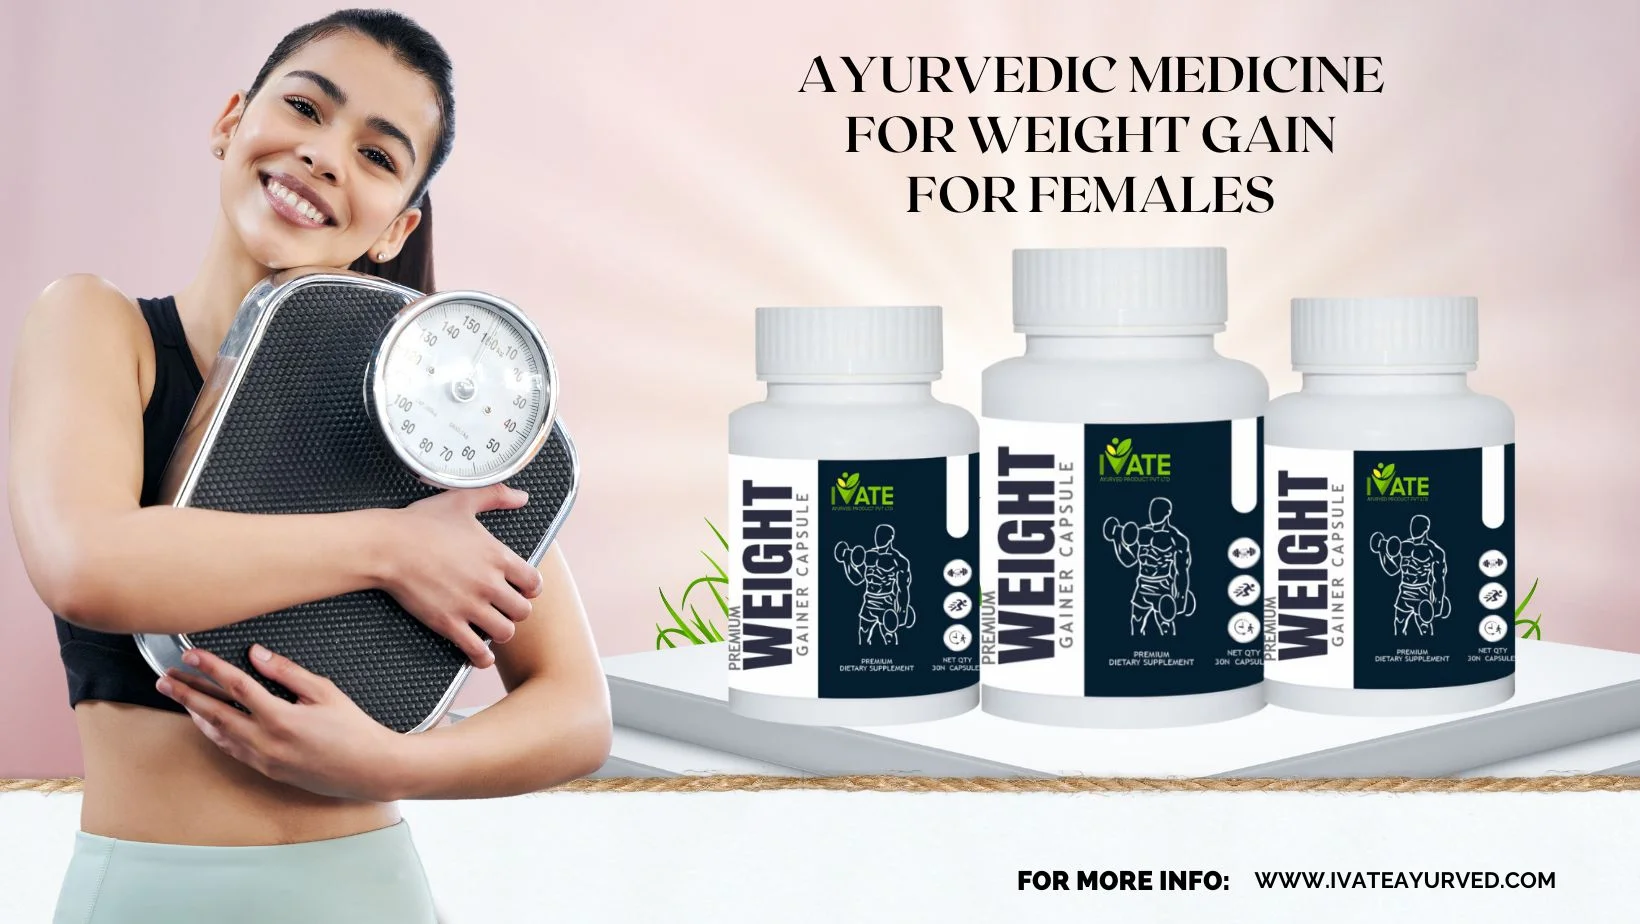 Ayurvedic medicines for weight gain